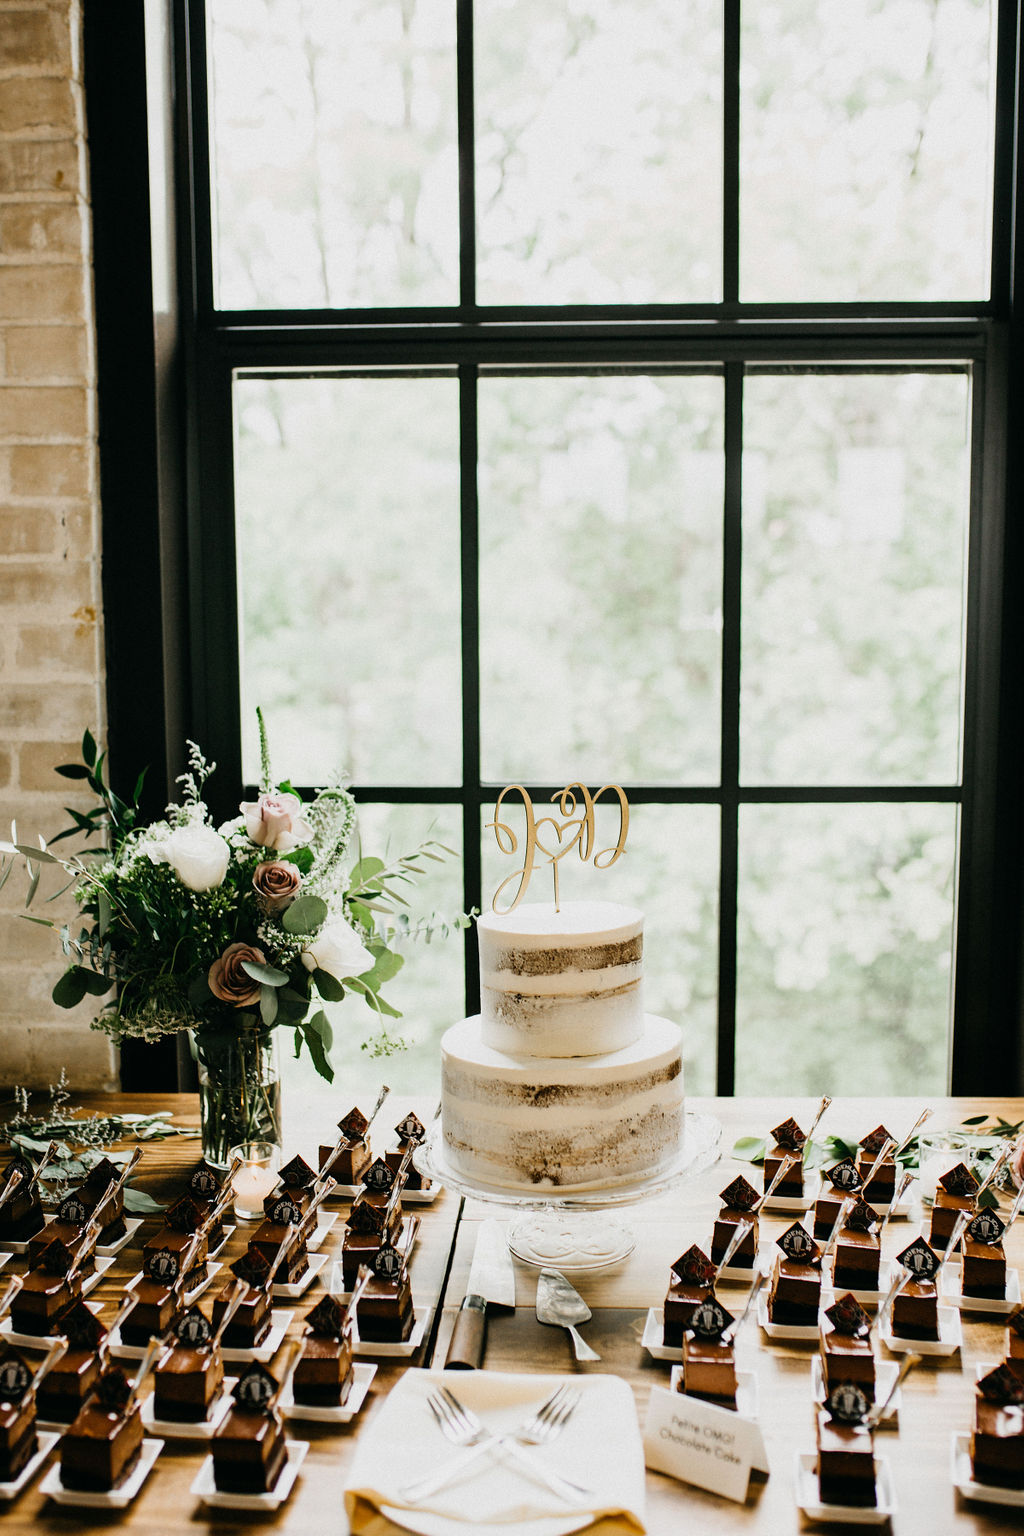 A wedding cake and desserts